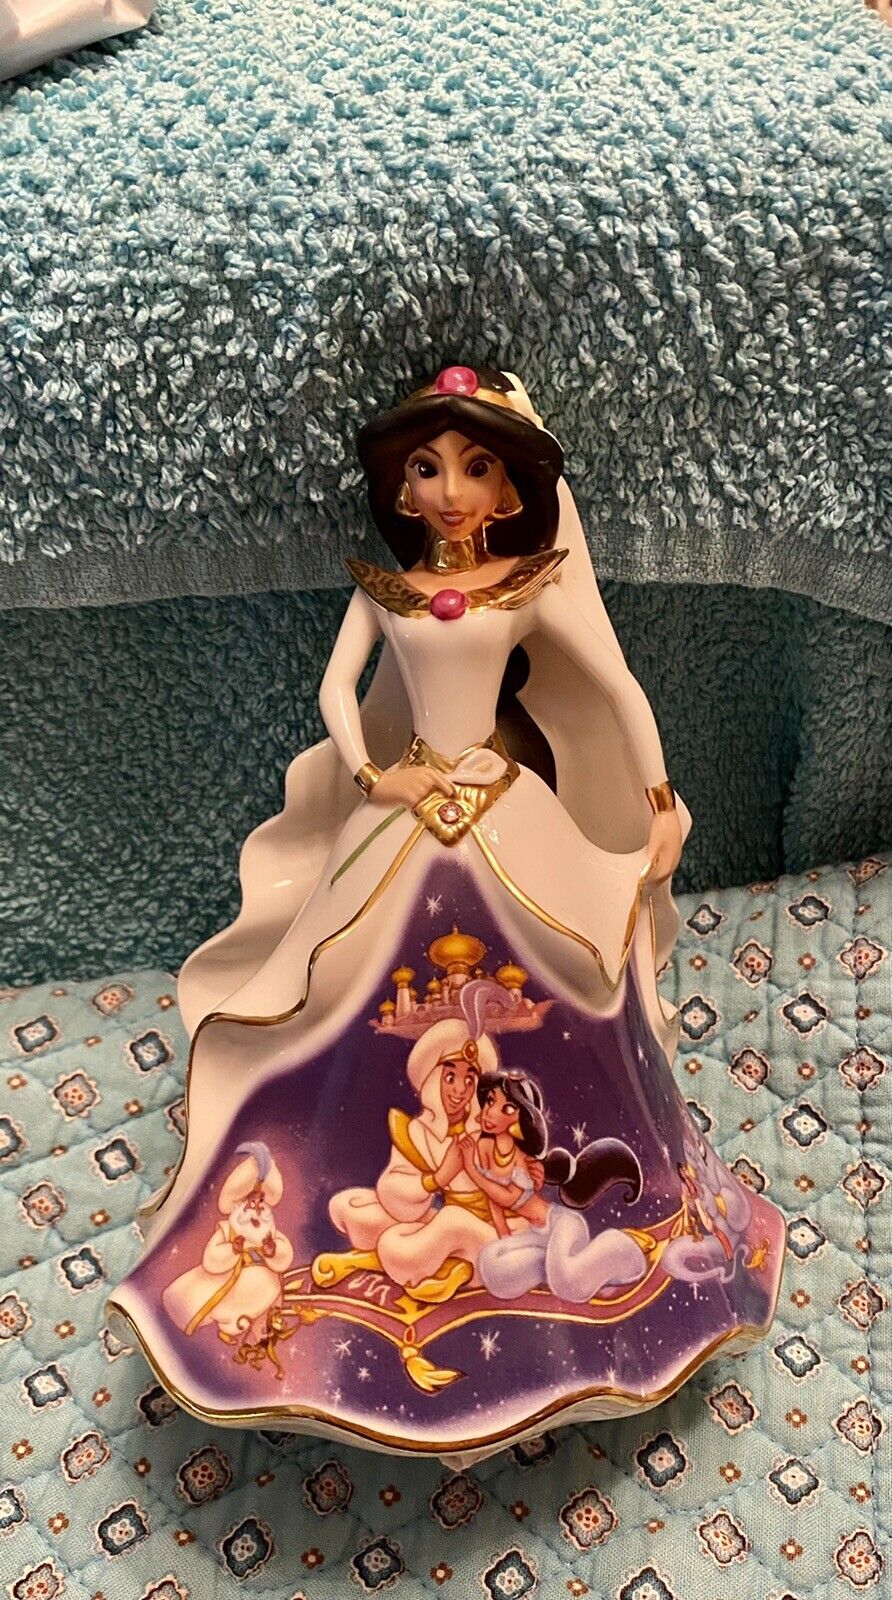 Disney Jasmine Bride Bell By Bradford Editions Dresses And Dreams